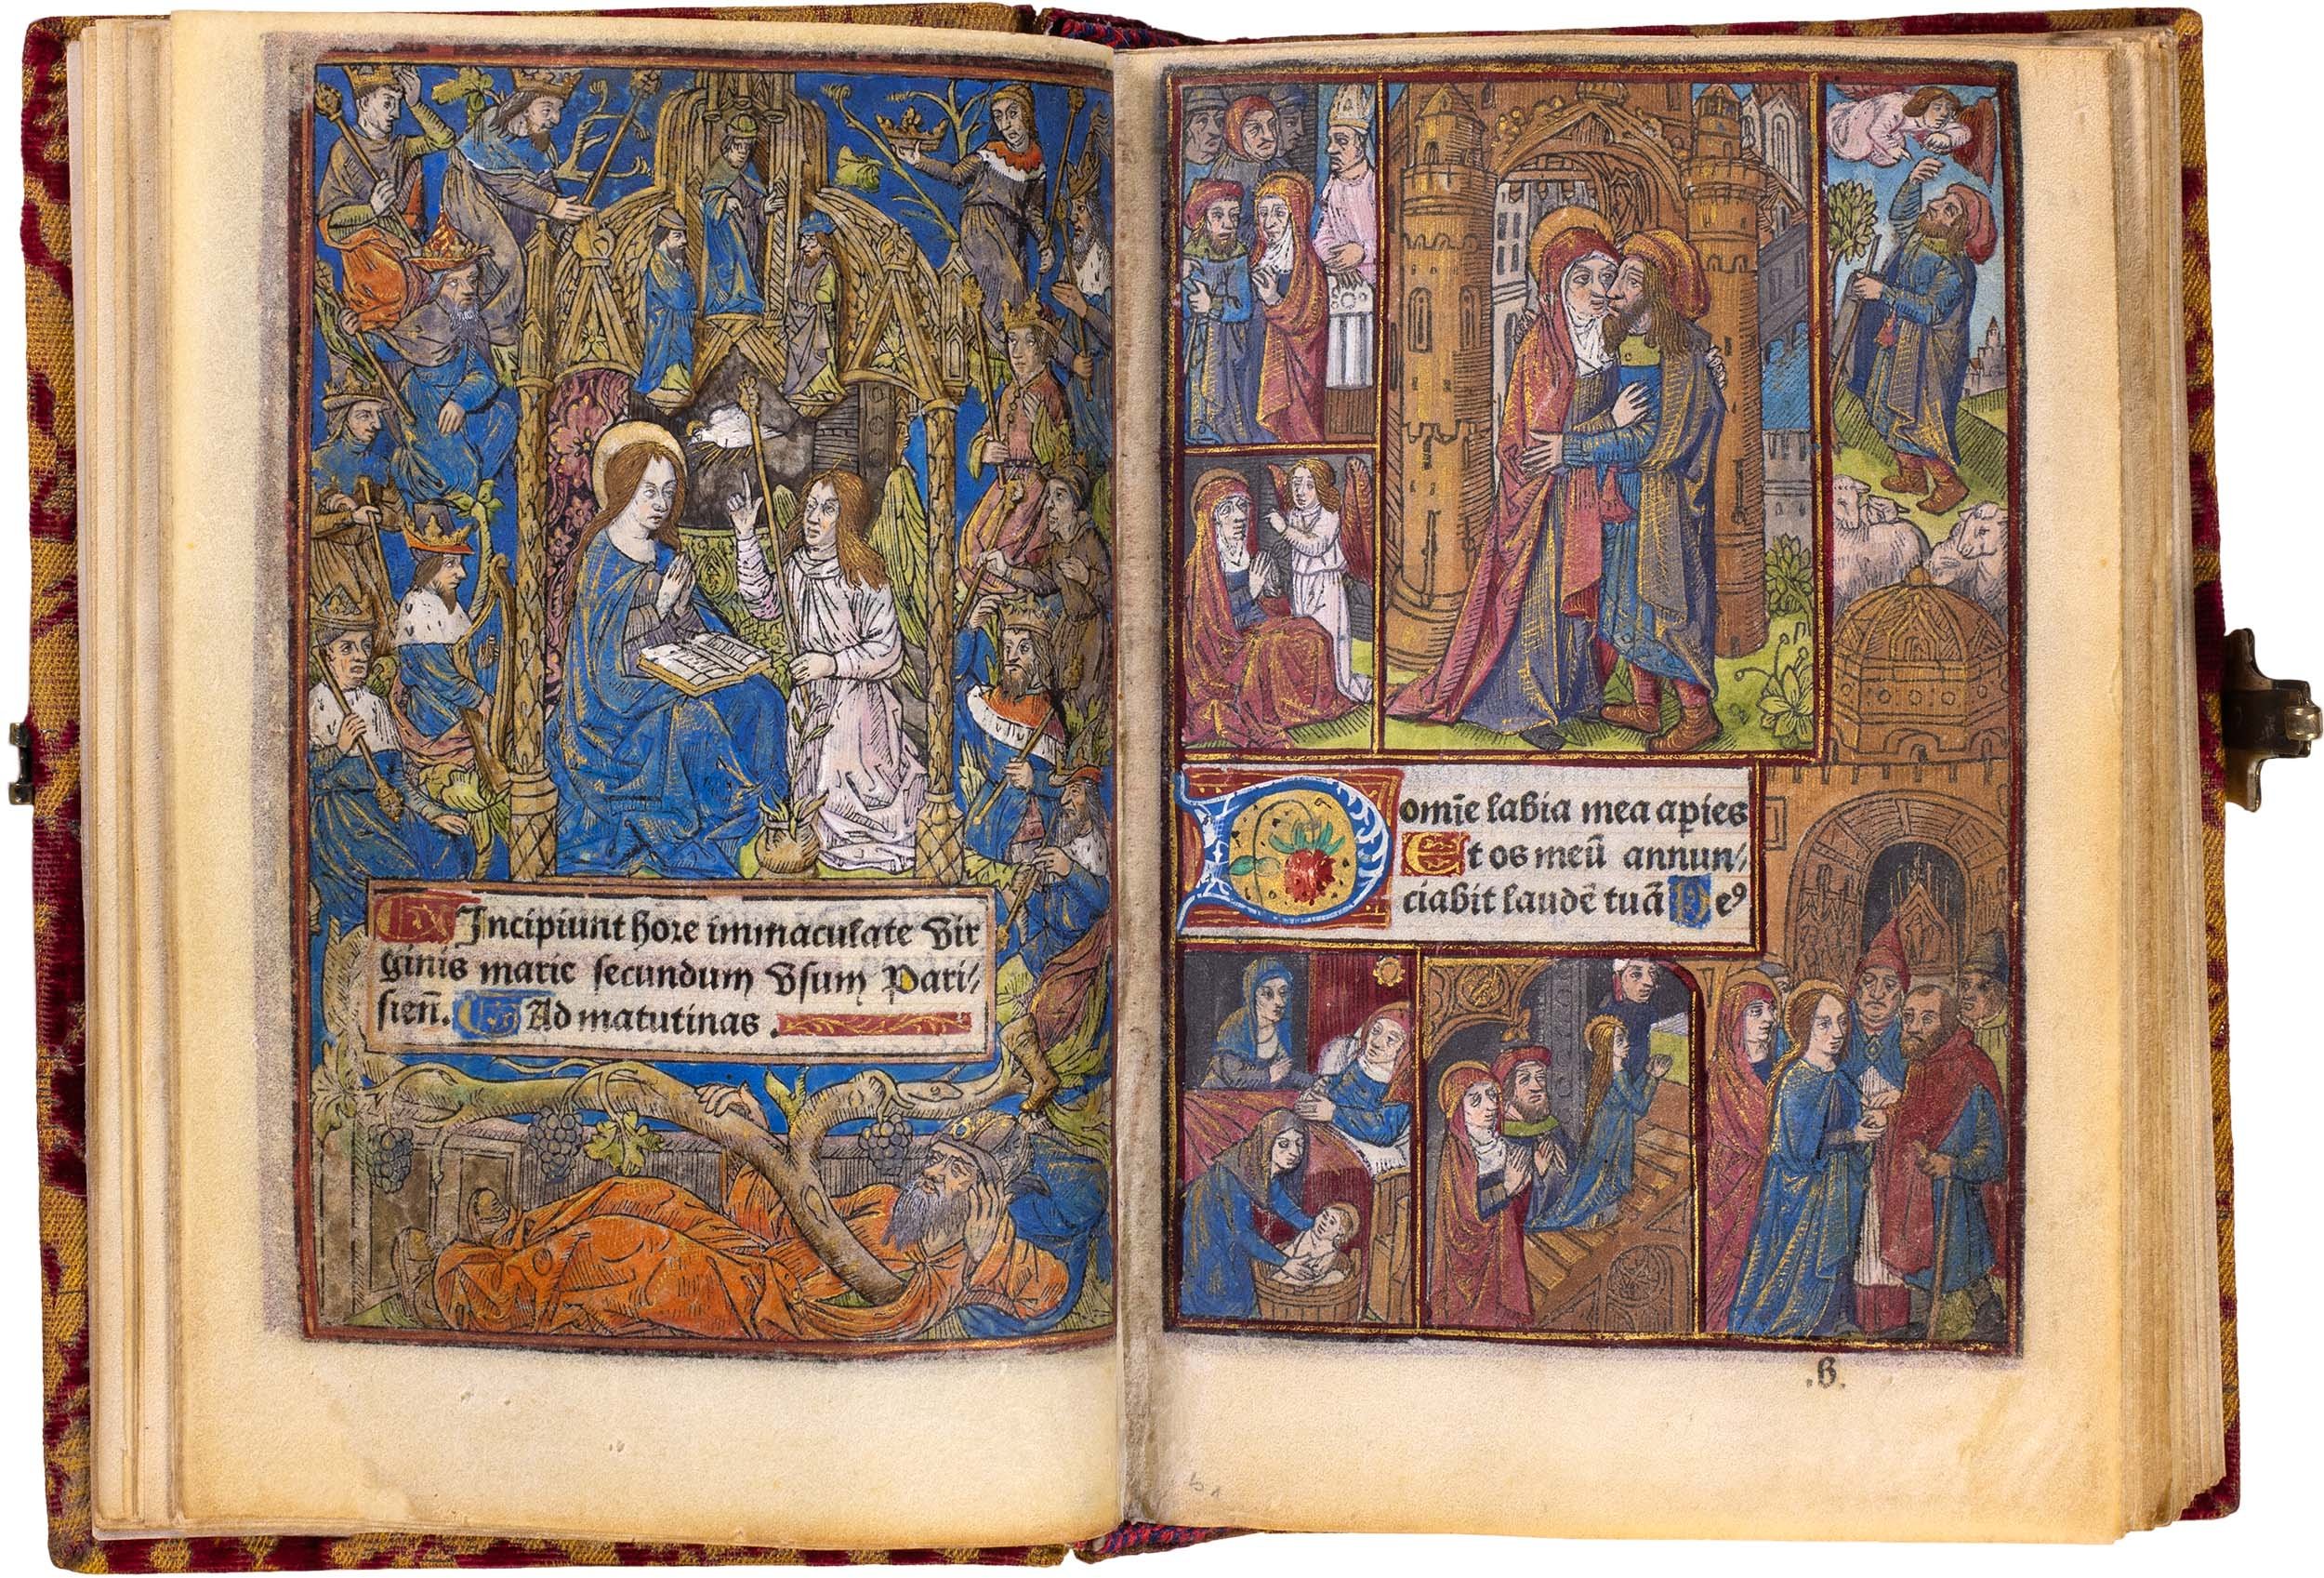 Horae-bmv-1488-gamma-dupre-printed-book-of-hours-danse-macabre-camaieu-dor-illuminated-vellum-copy-27.jpg